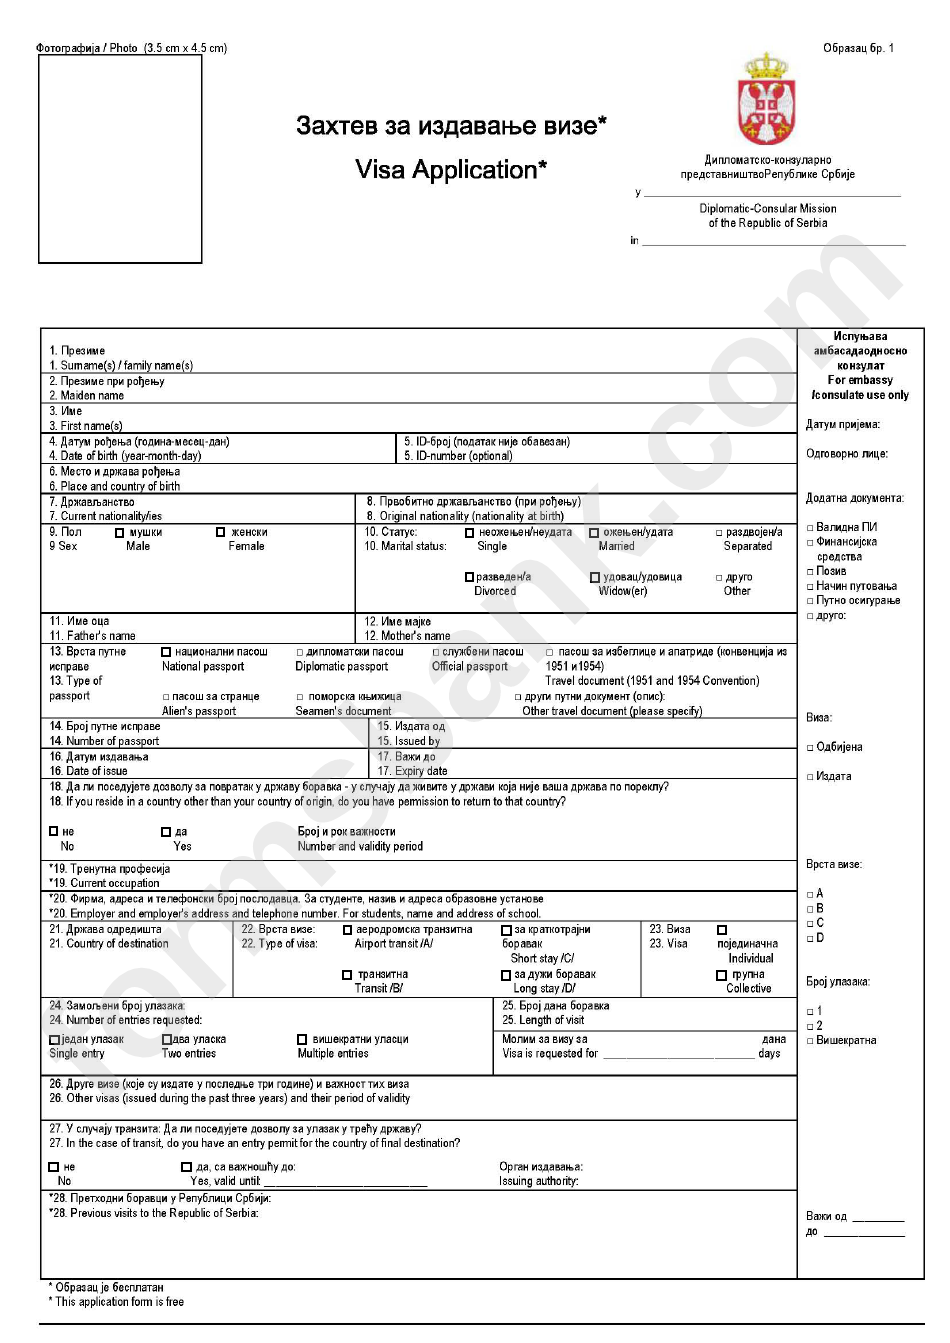 serbia tourist visa application form